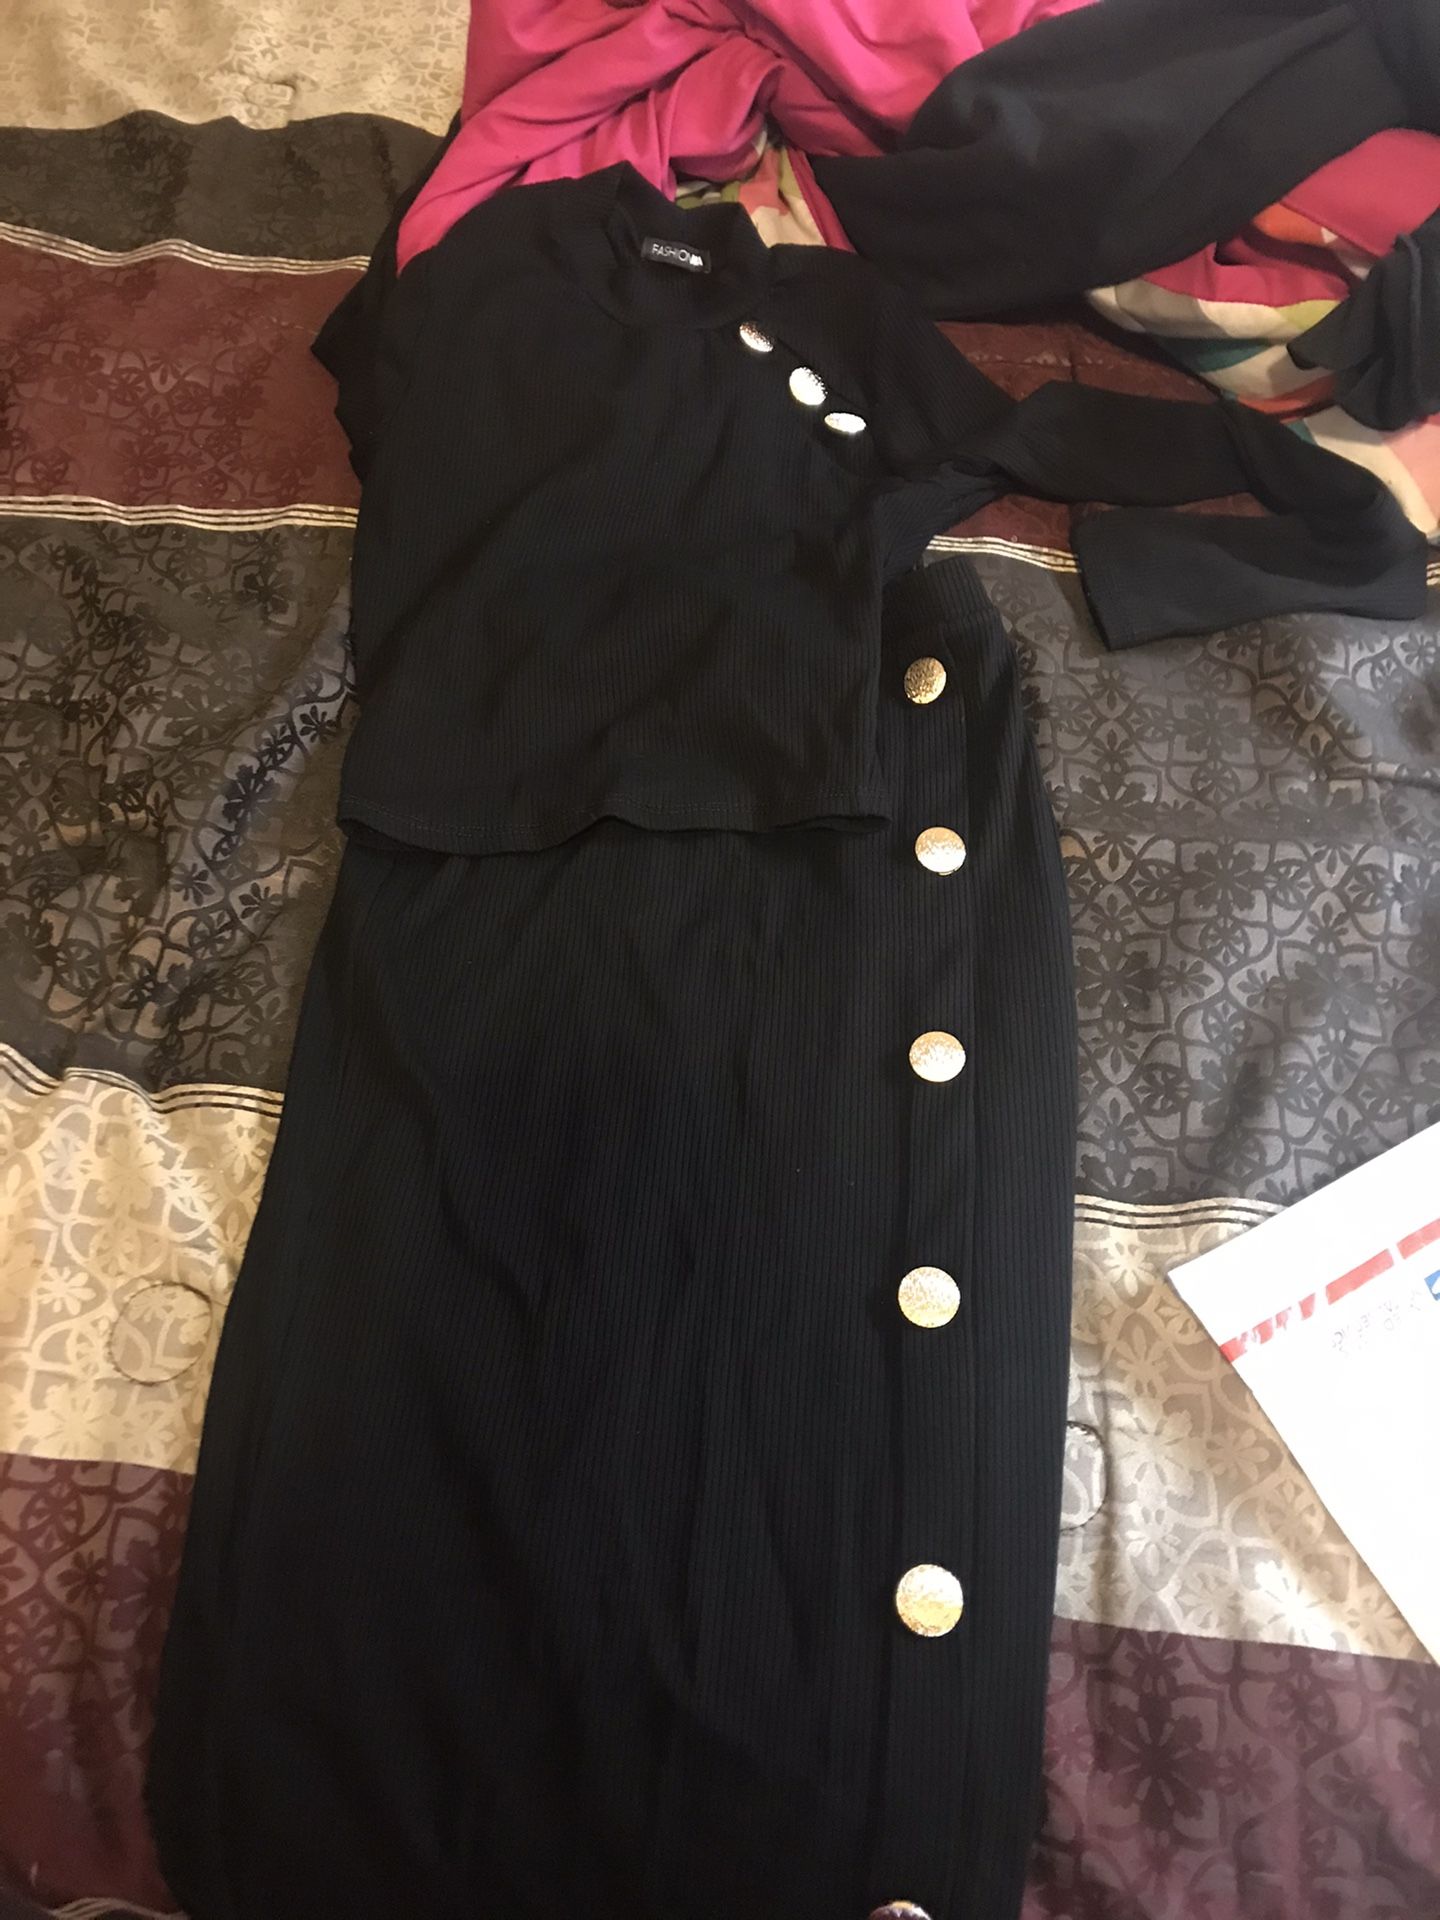 All black button dress